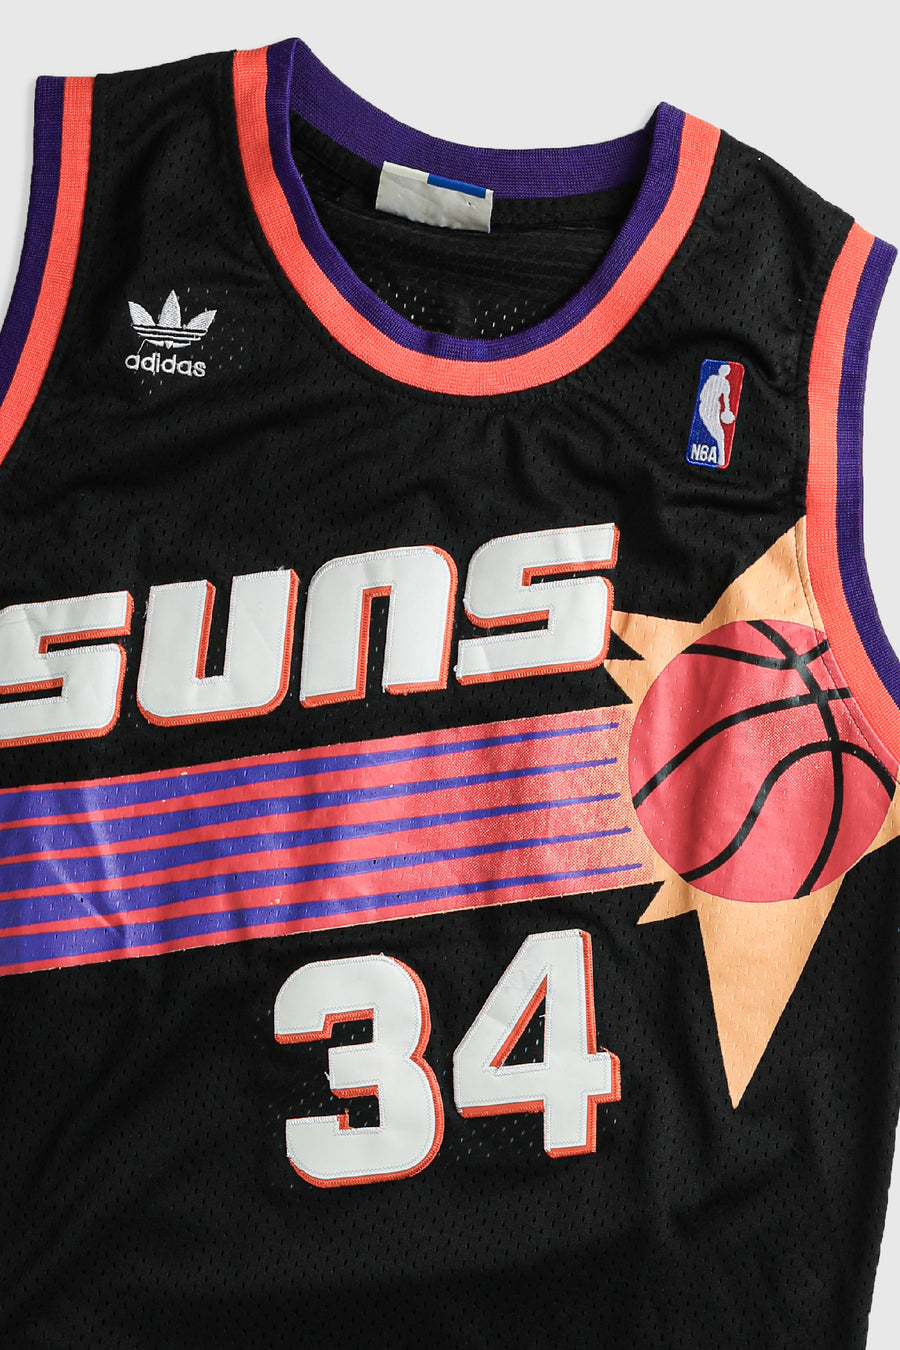 Vintage Suns NBA Jersey